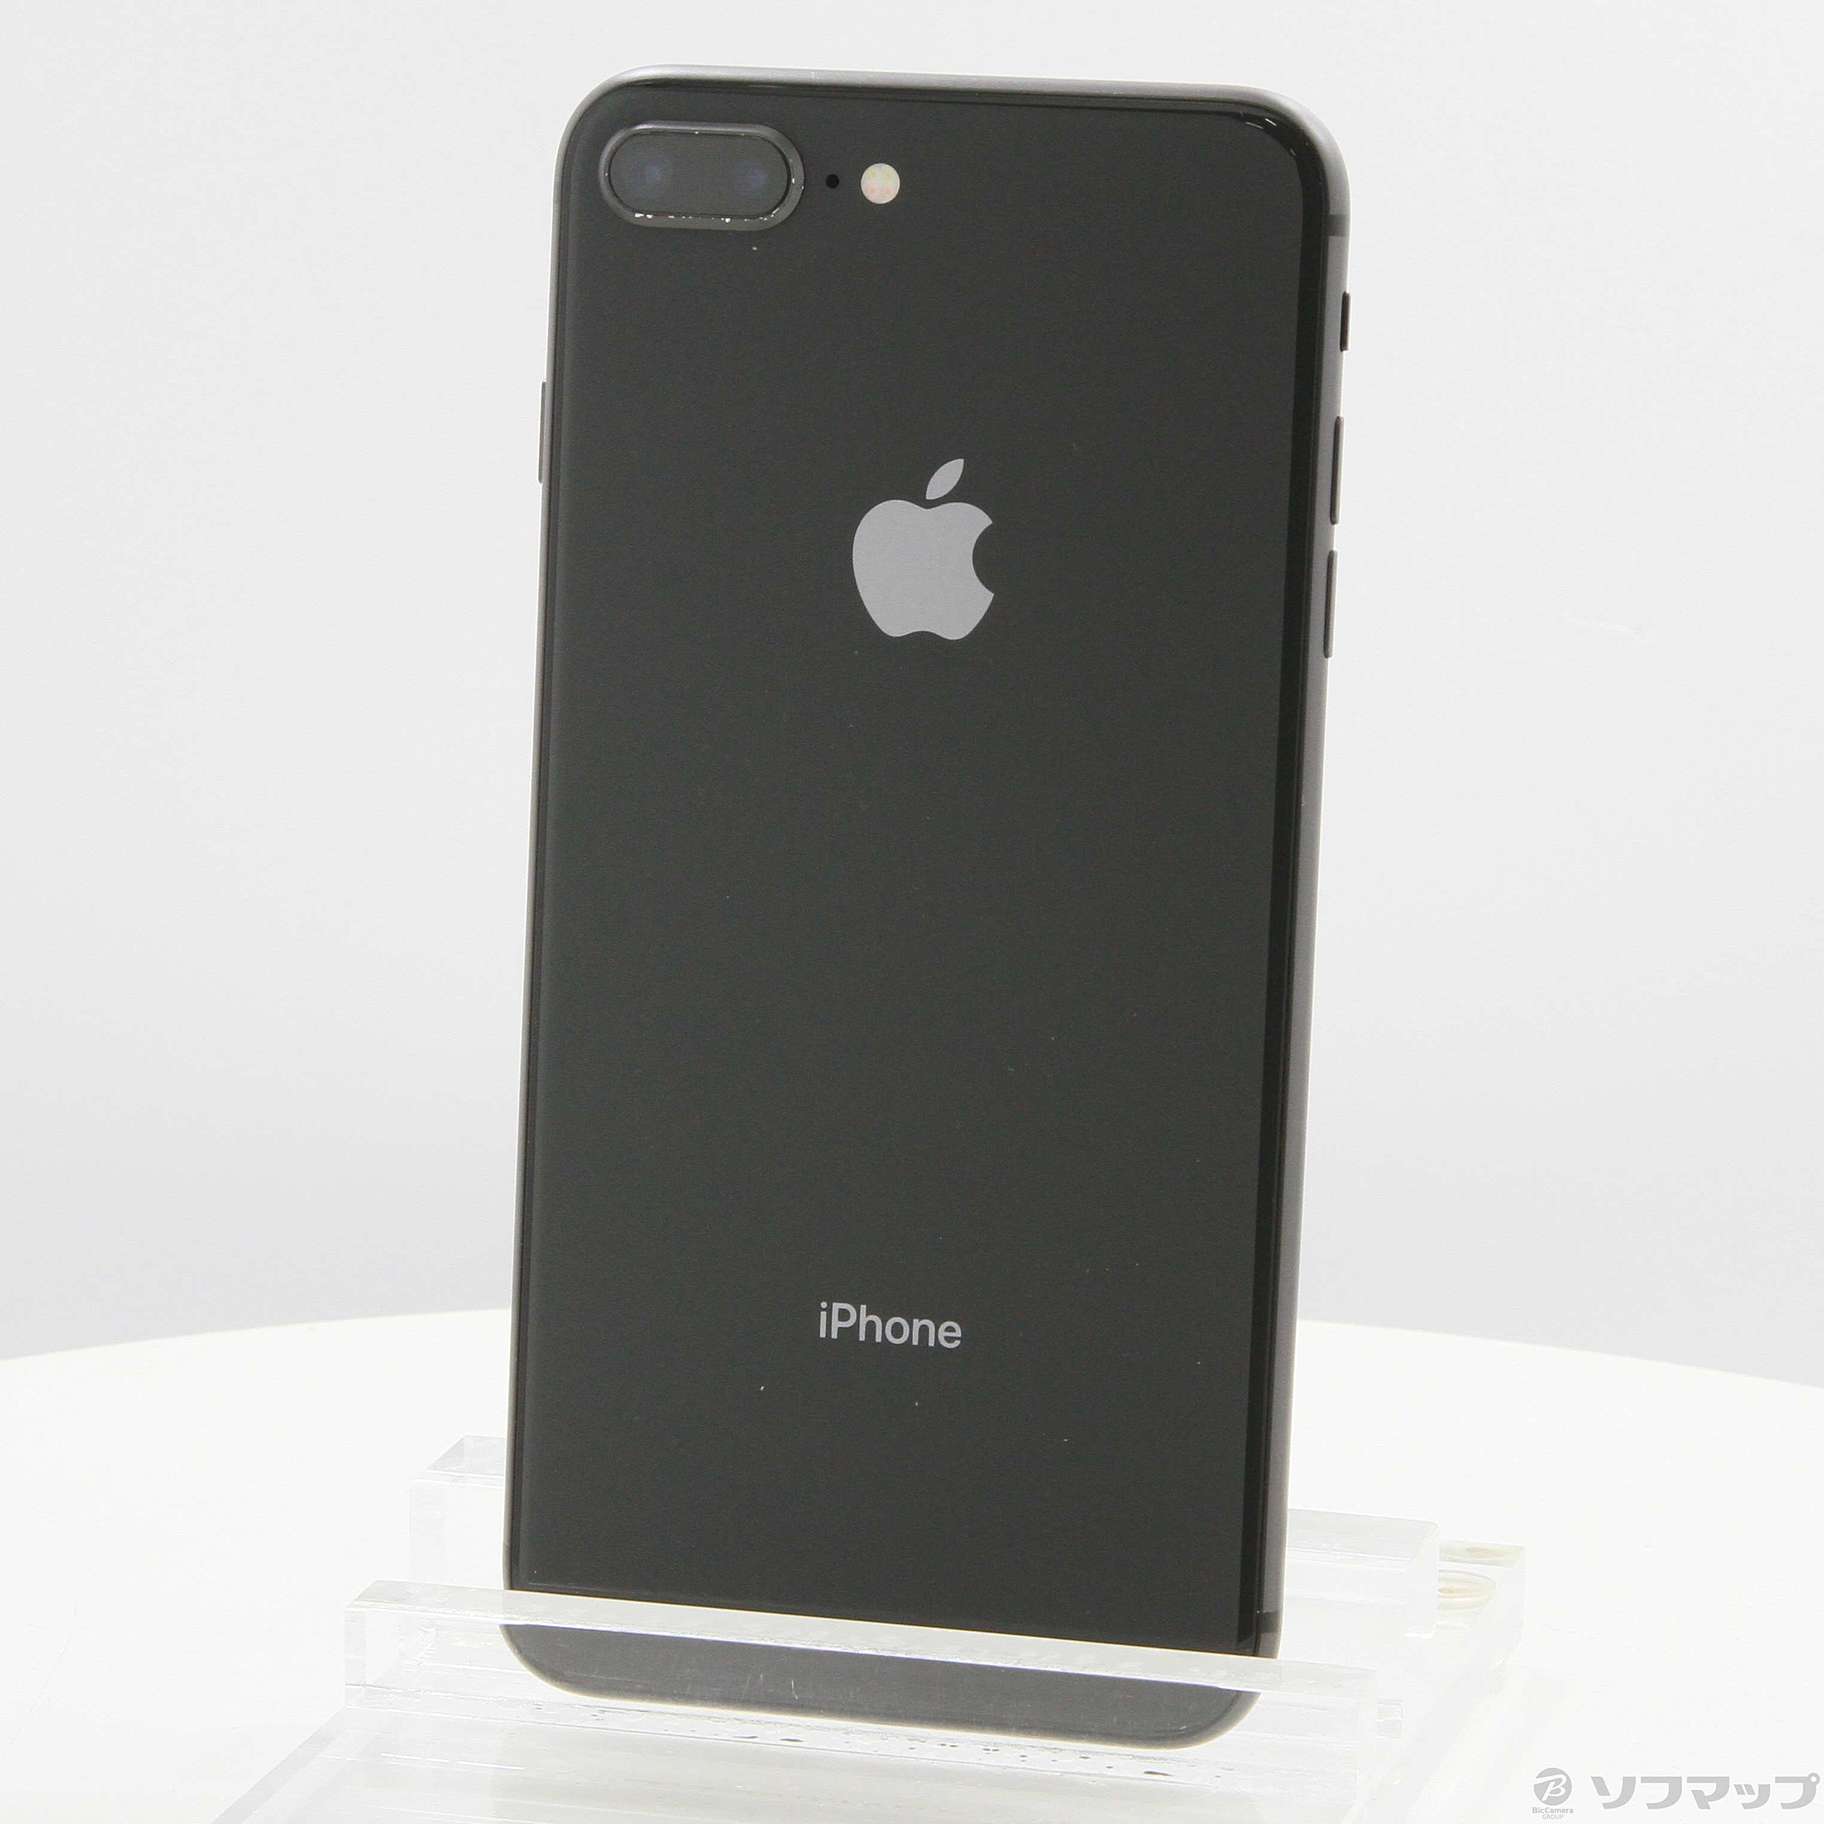 iPhone8 space gray 256GB SIMフリー